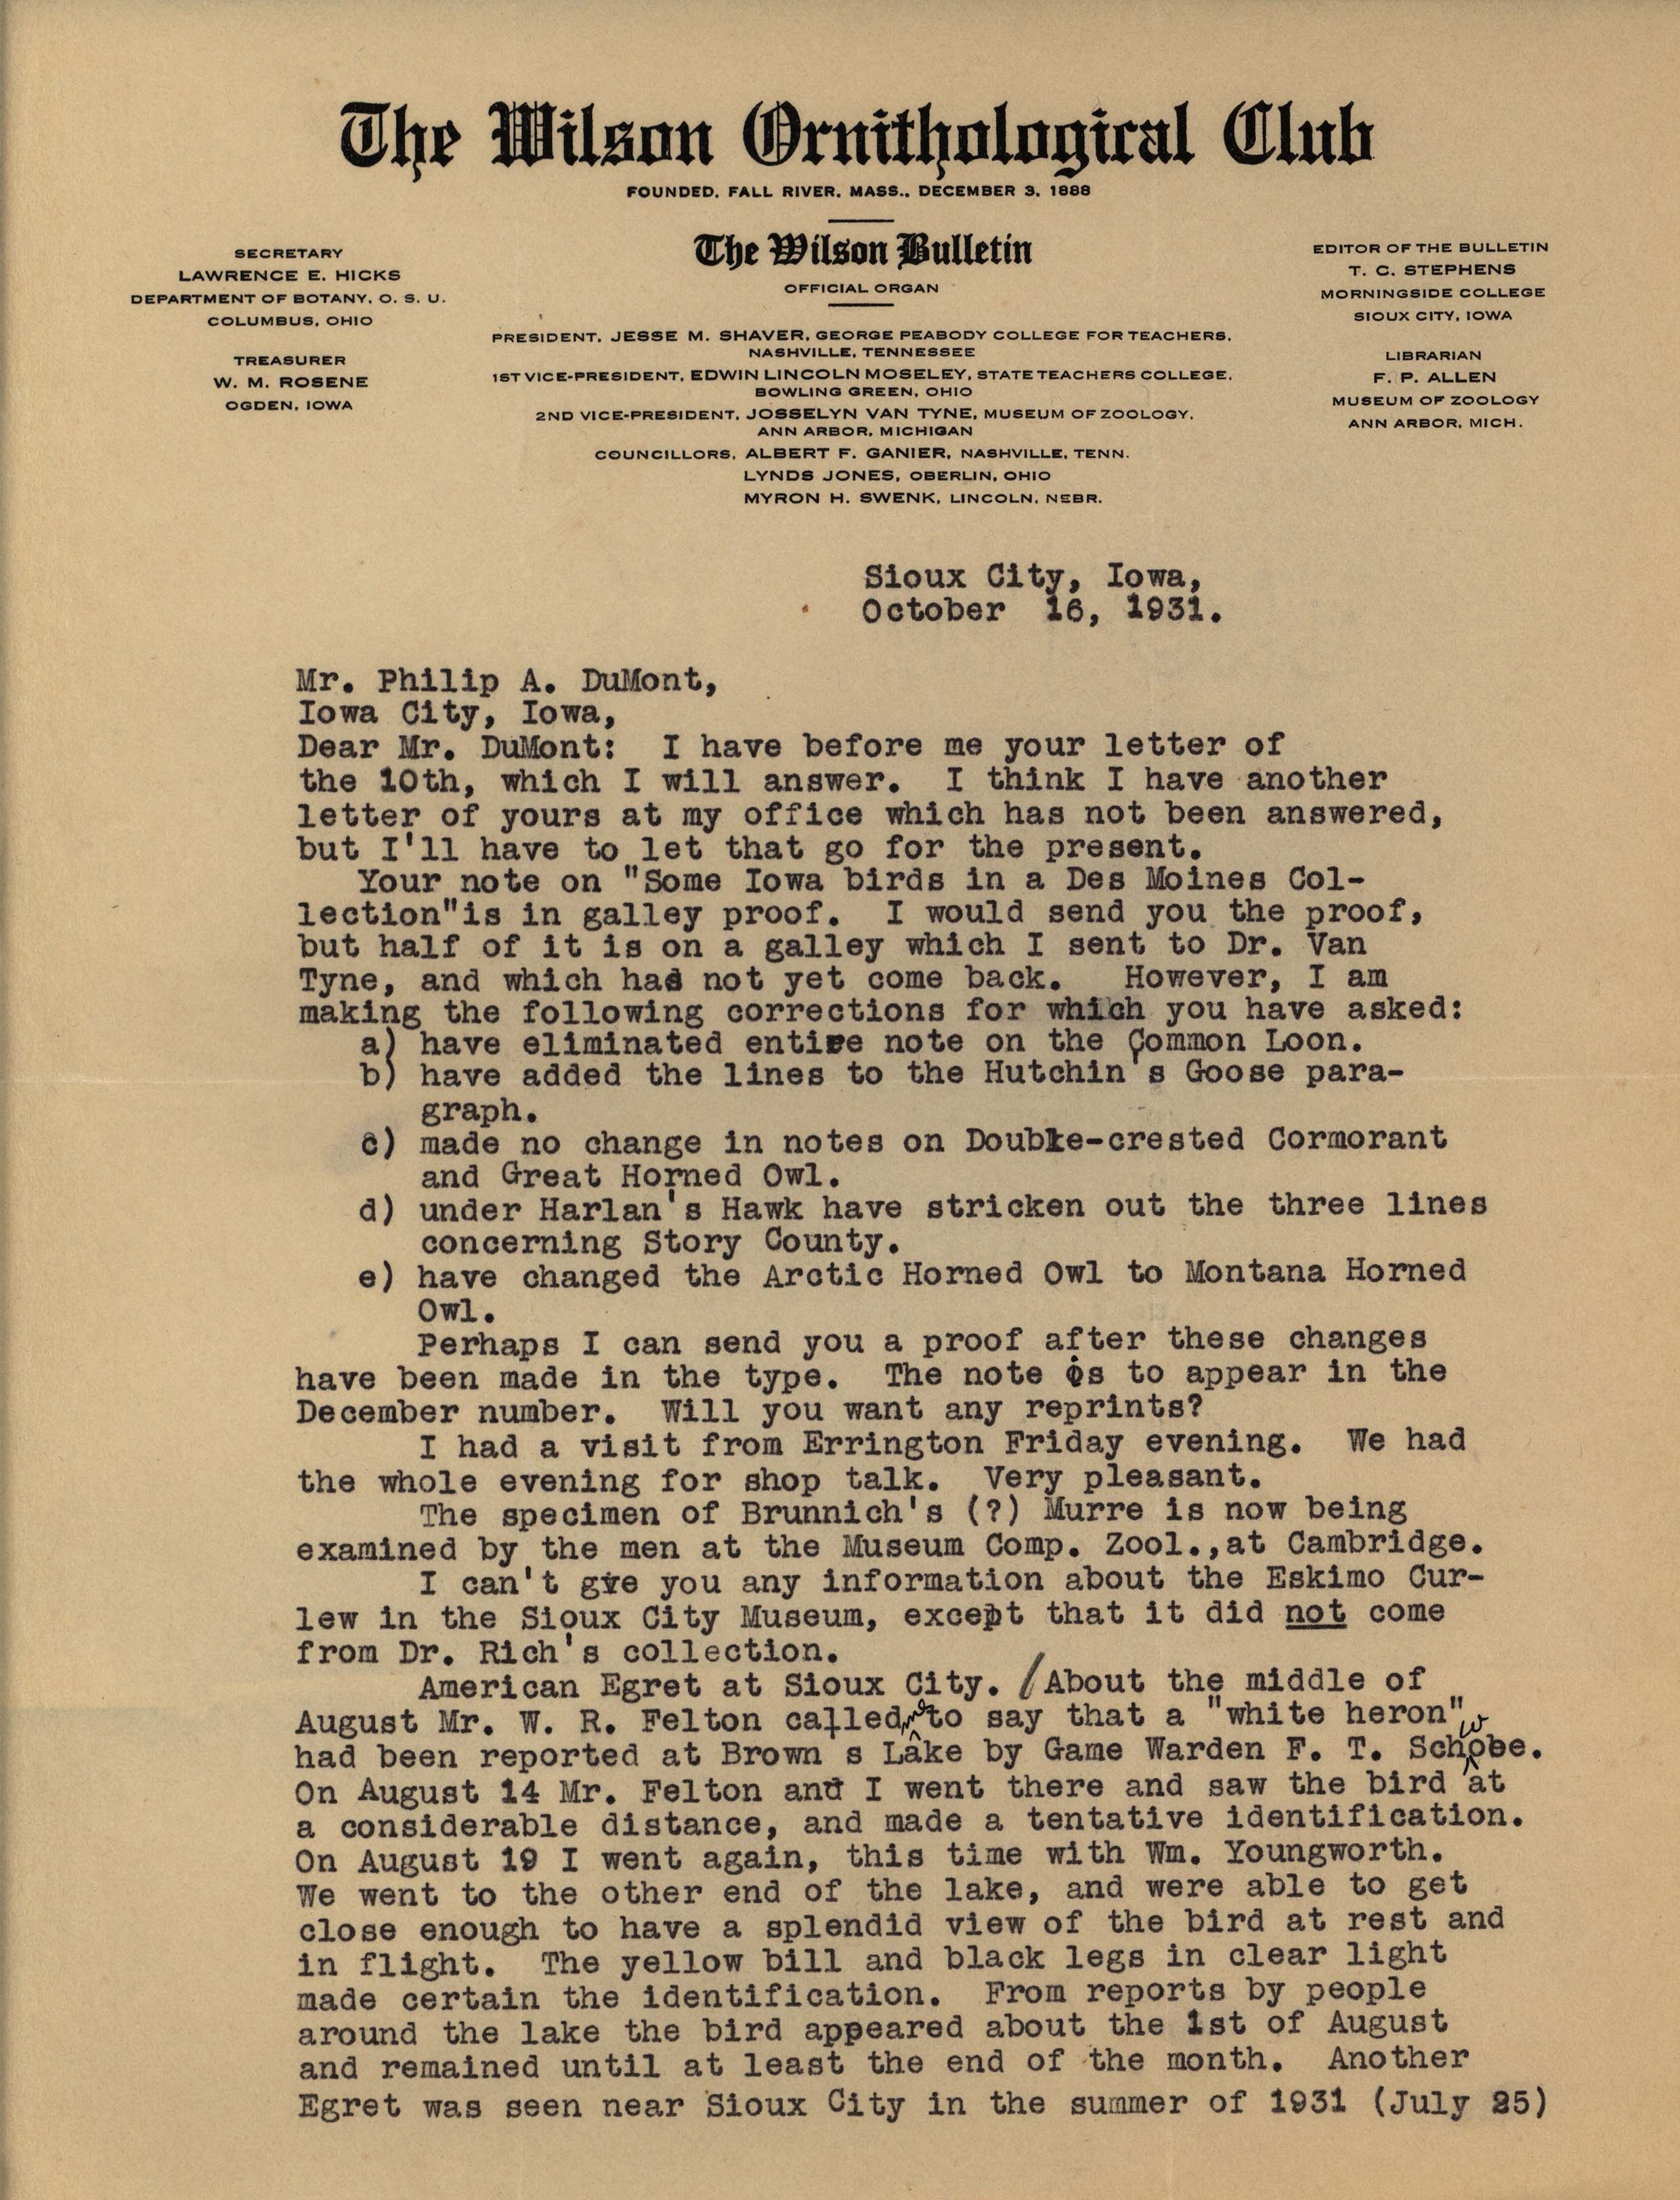 Thomas Stephens letter to Philip DuMont regarding preparing an article for publication, October 16, 1931